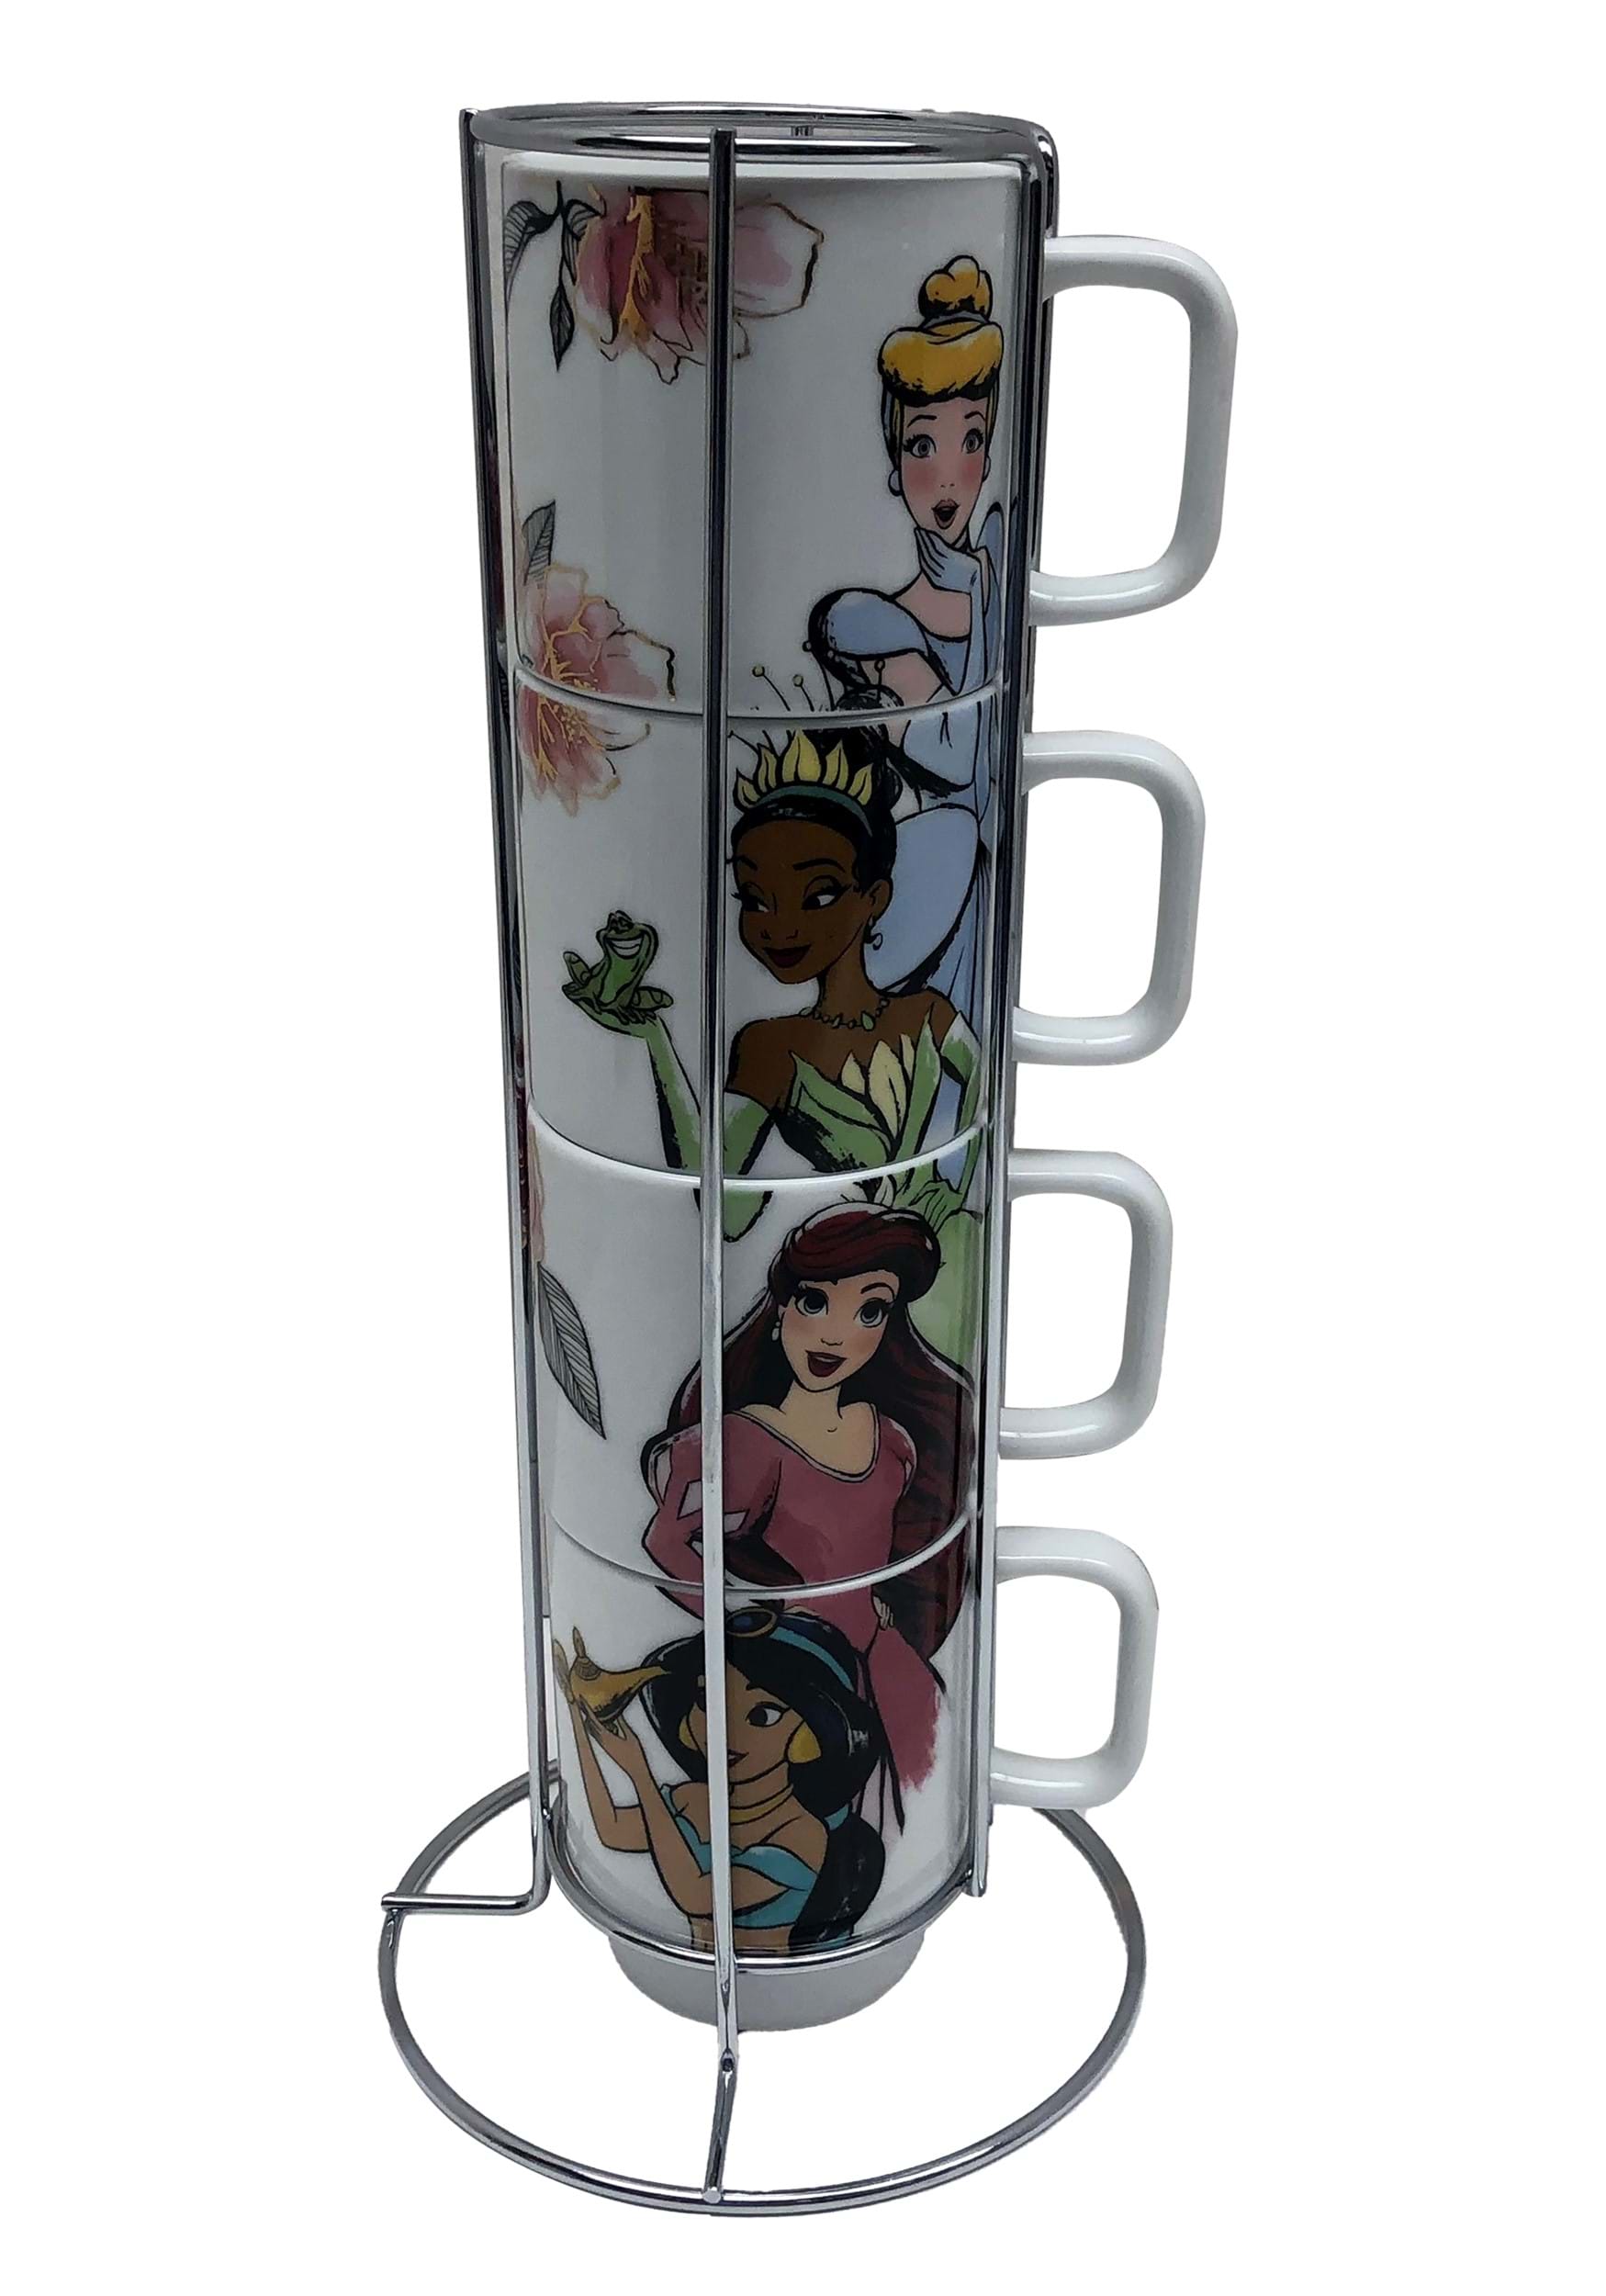 Disney Princess Kids' Porcelain Mug, 255ml, Multi